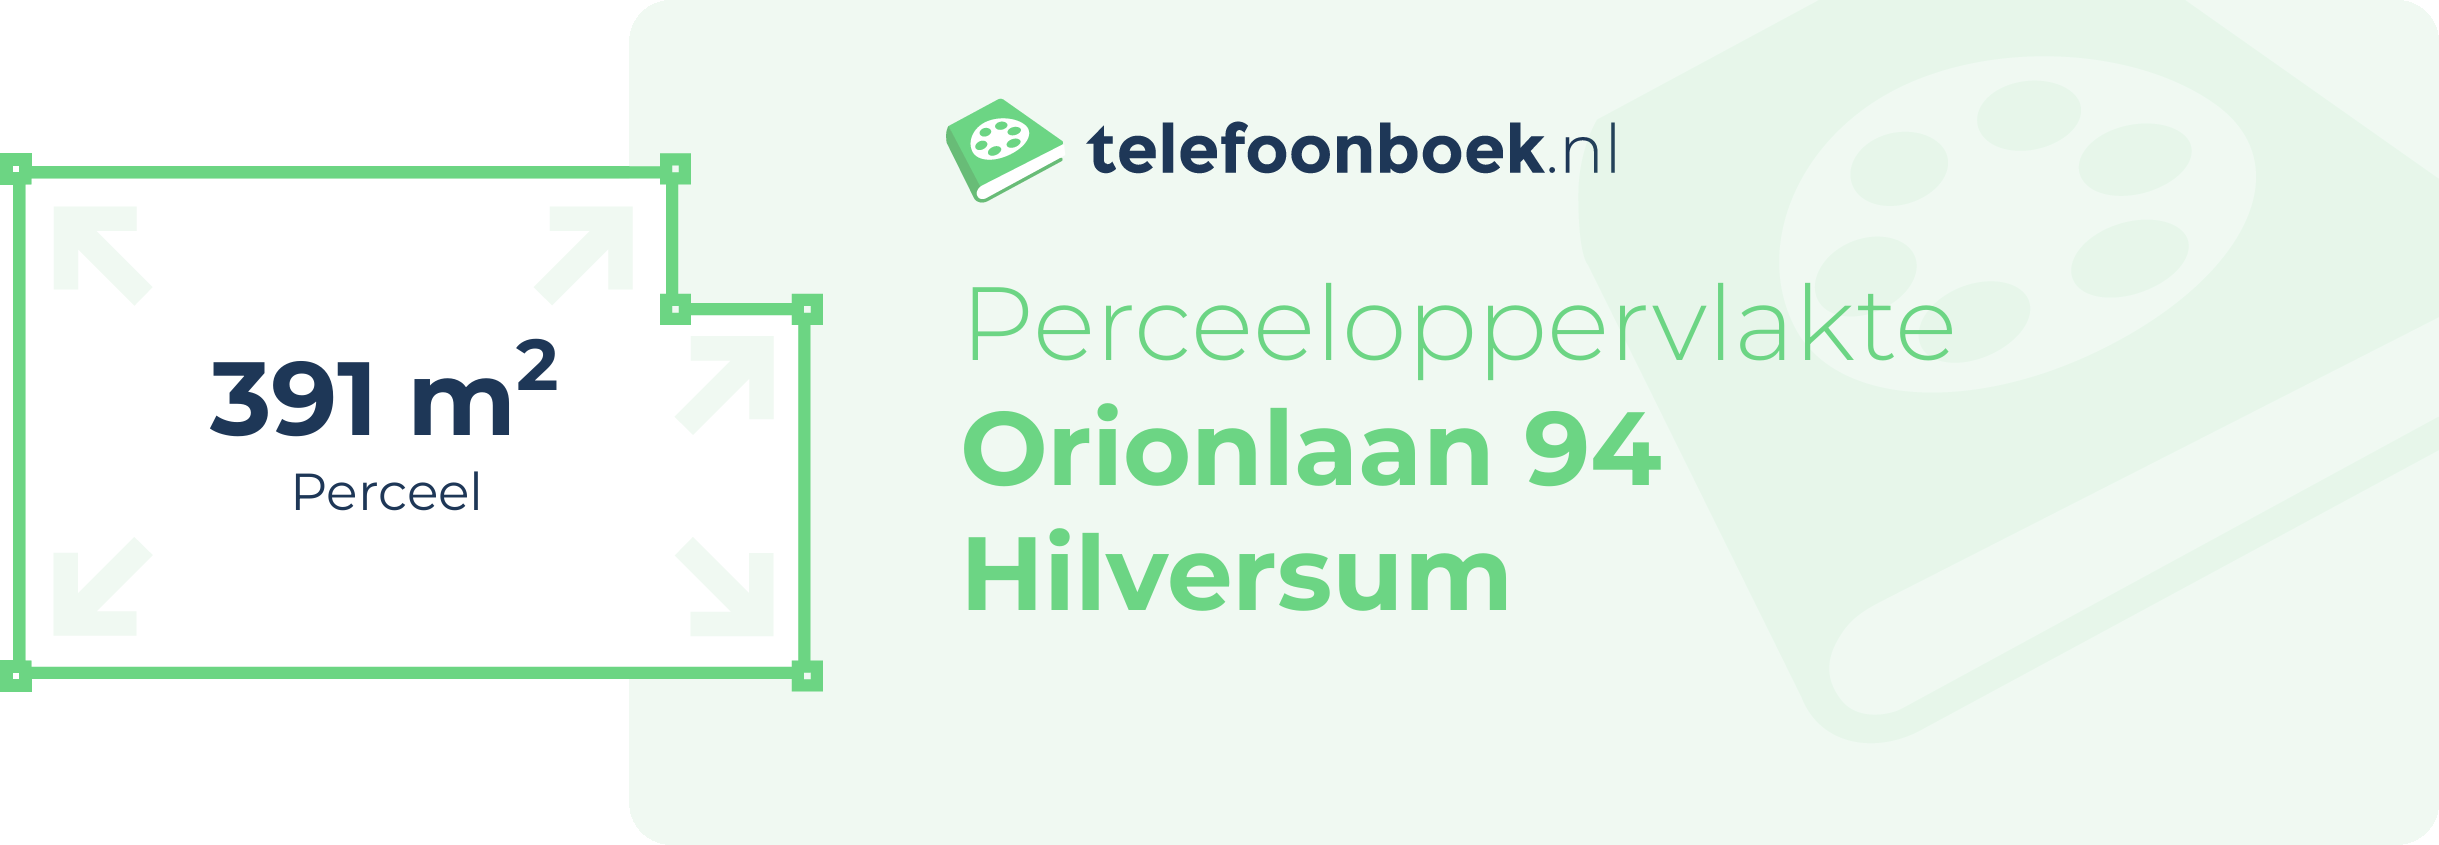 Perceeloppervlakte Orionlaan 94 Hilversum